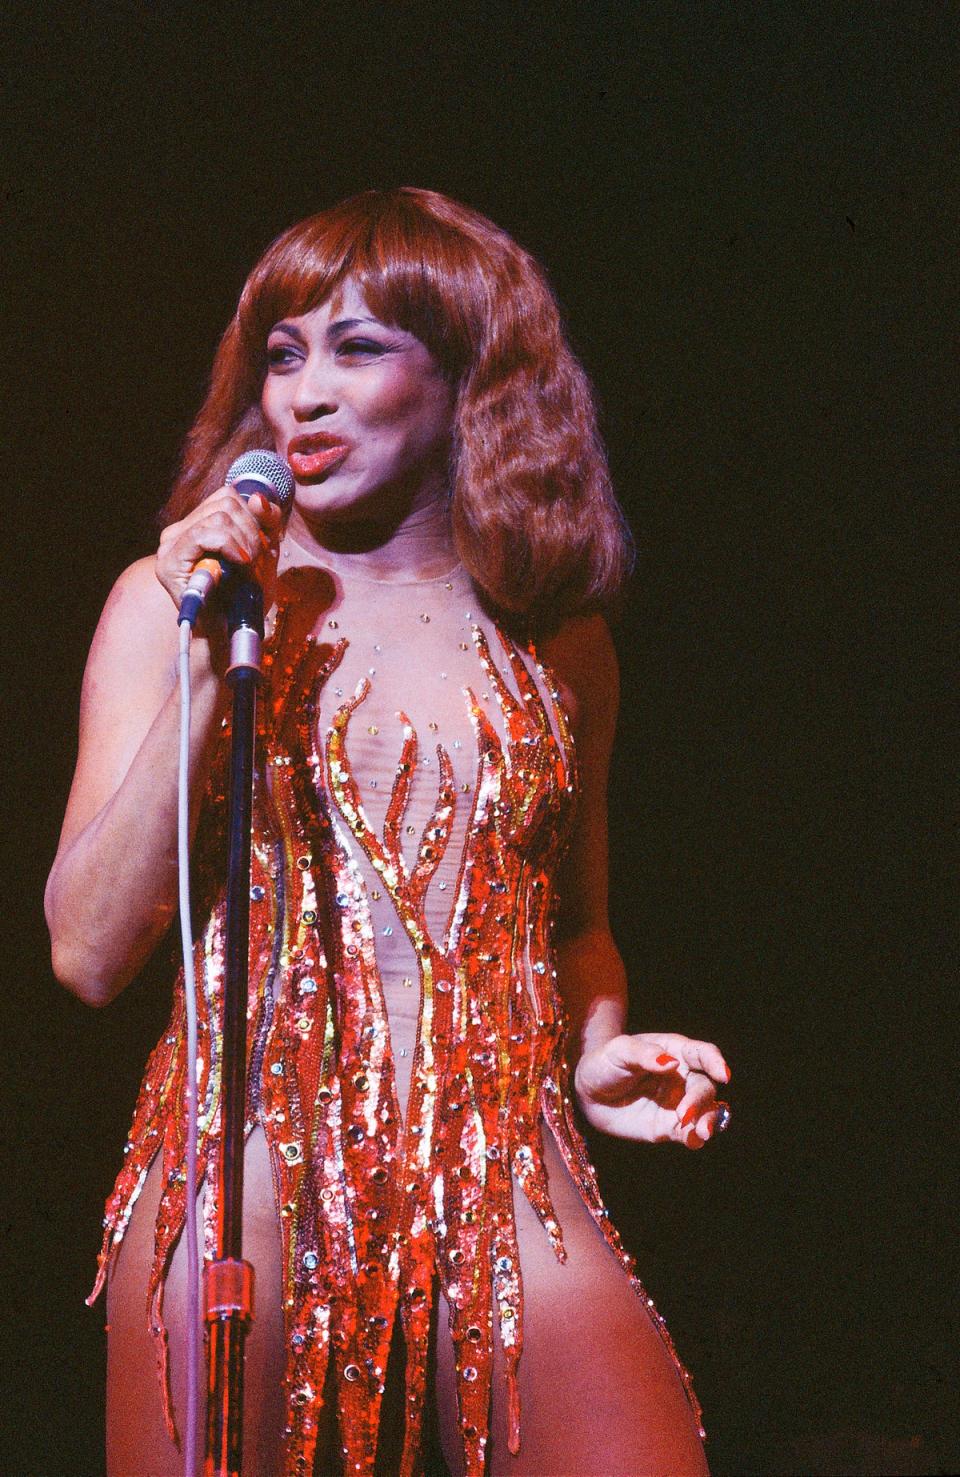 Tina Turner wearing the Flame dress designed by Bob Mackie, 1980 (Redferns)